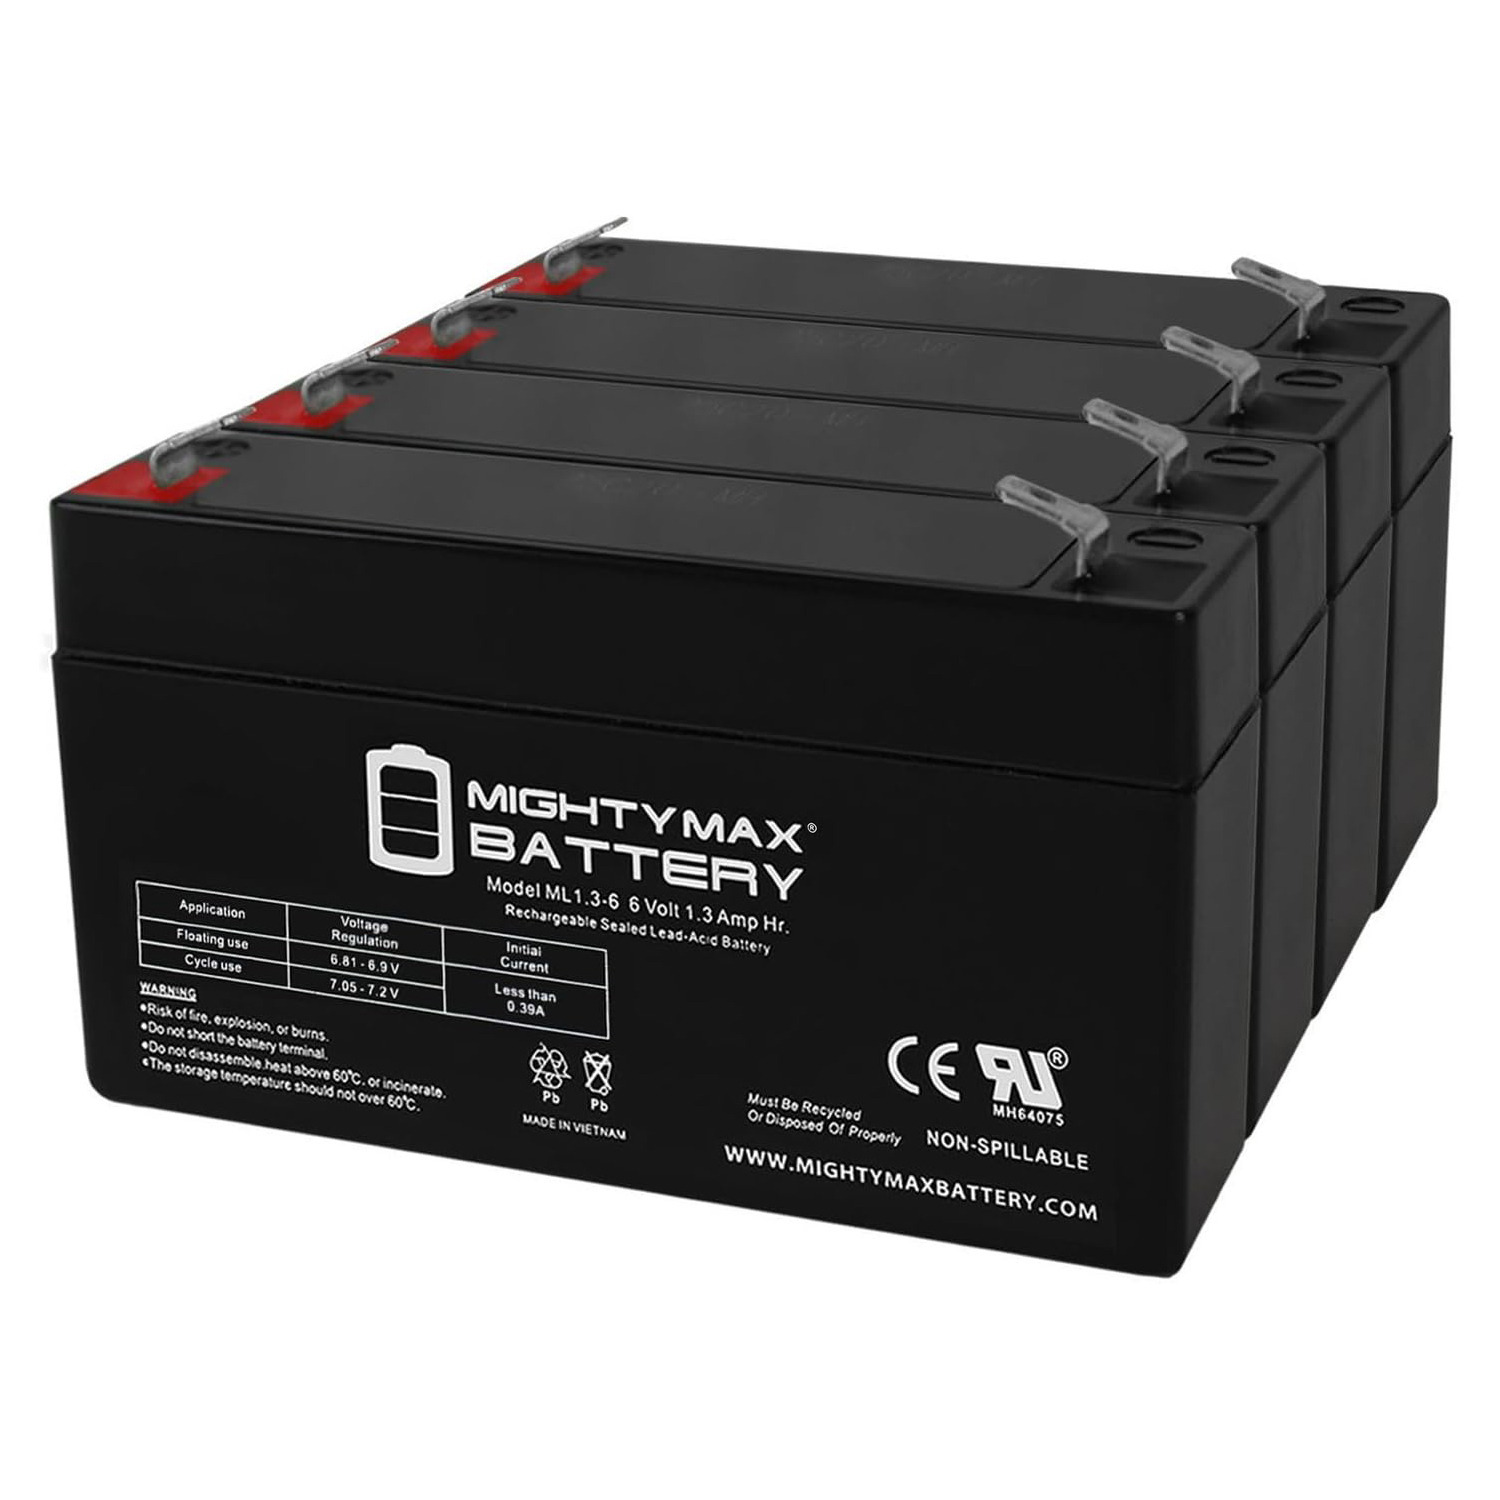 6V 1.3Ah Portalac GS PE6V1.3F1 Emergency Light Battery - 4 Pack